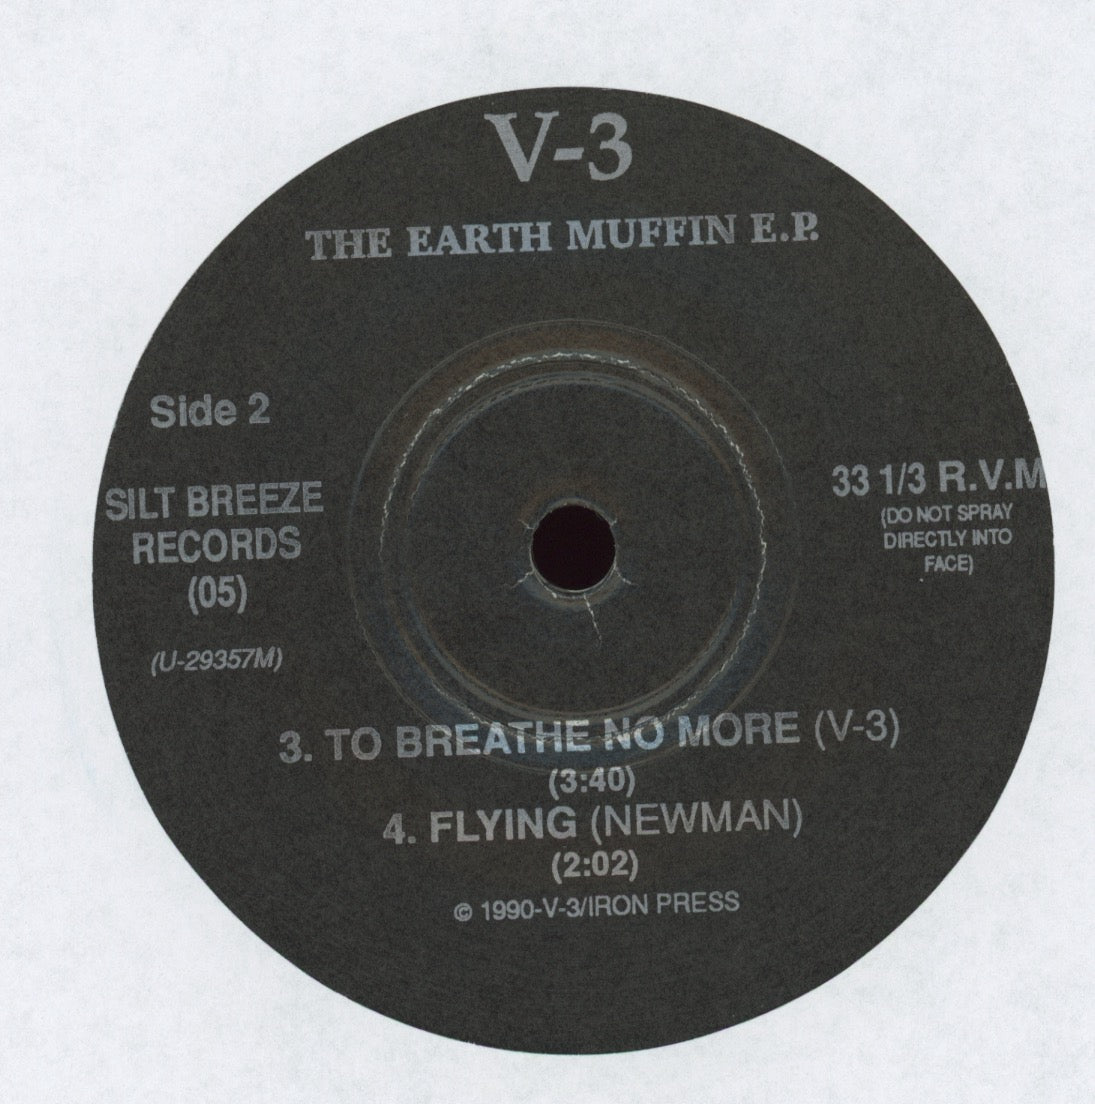 V-3 - The Earth Muffin E.P. on Silt Breeze Jim Shepard